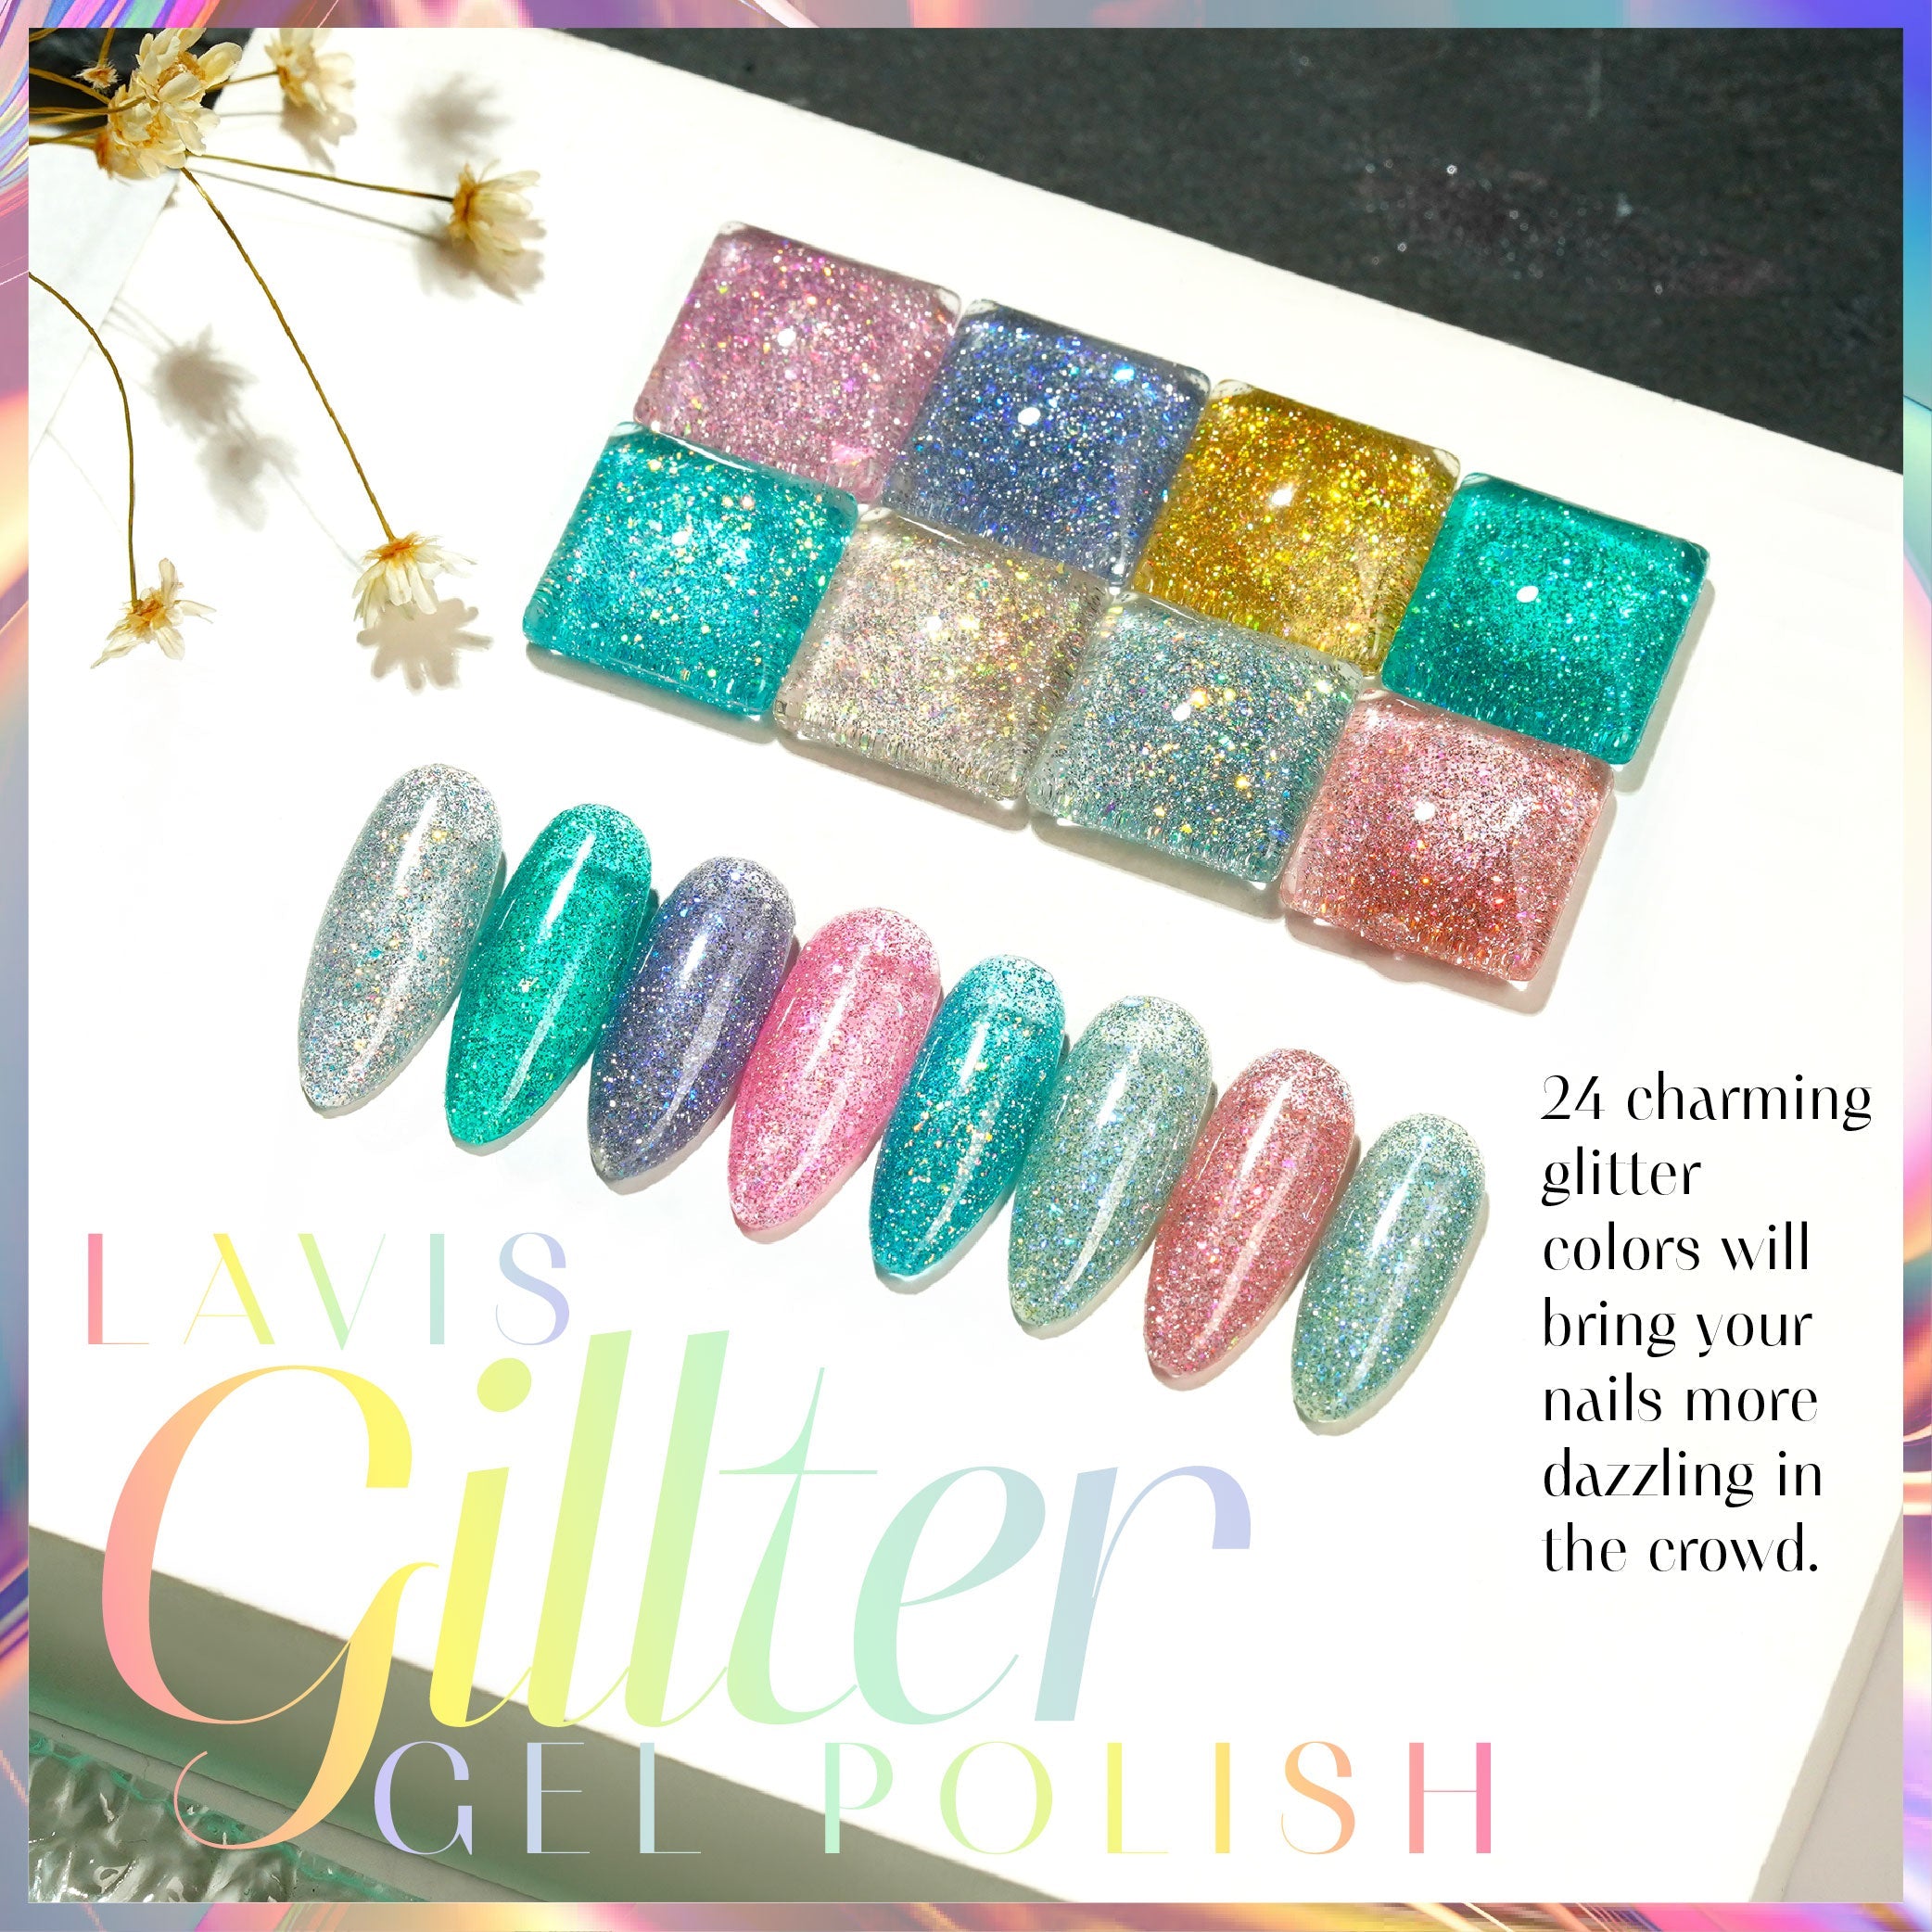 LAVIS Glitter G04 - 23 - Gel Polish 0.5 oz - Couture Collection